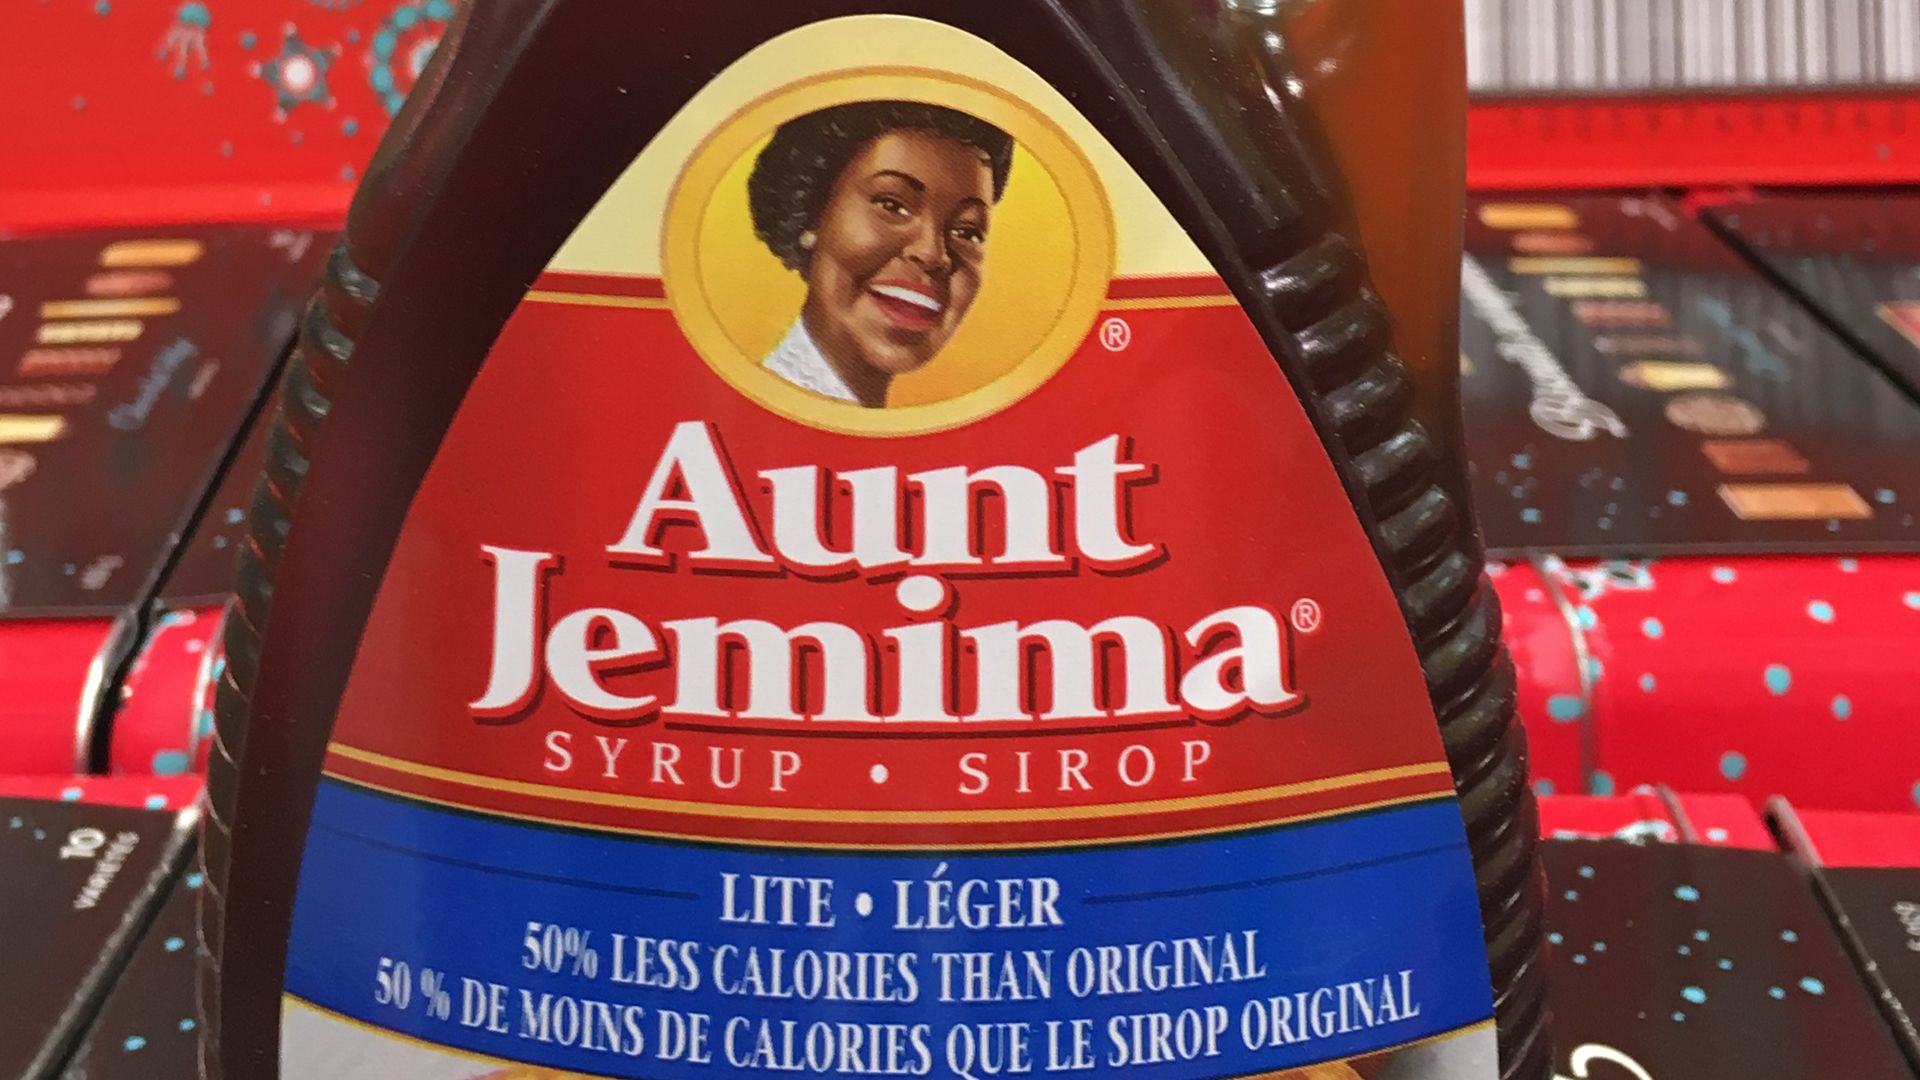 A bottle of Aunt Jemima syrup